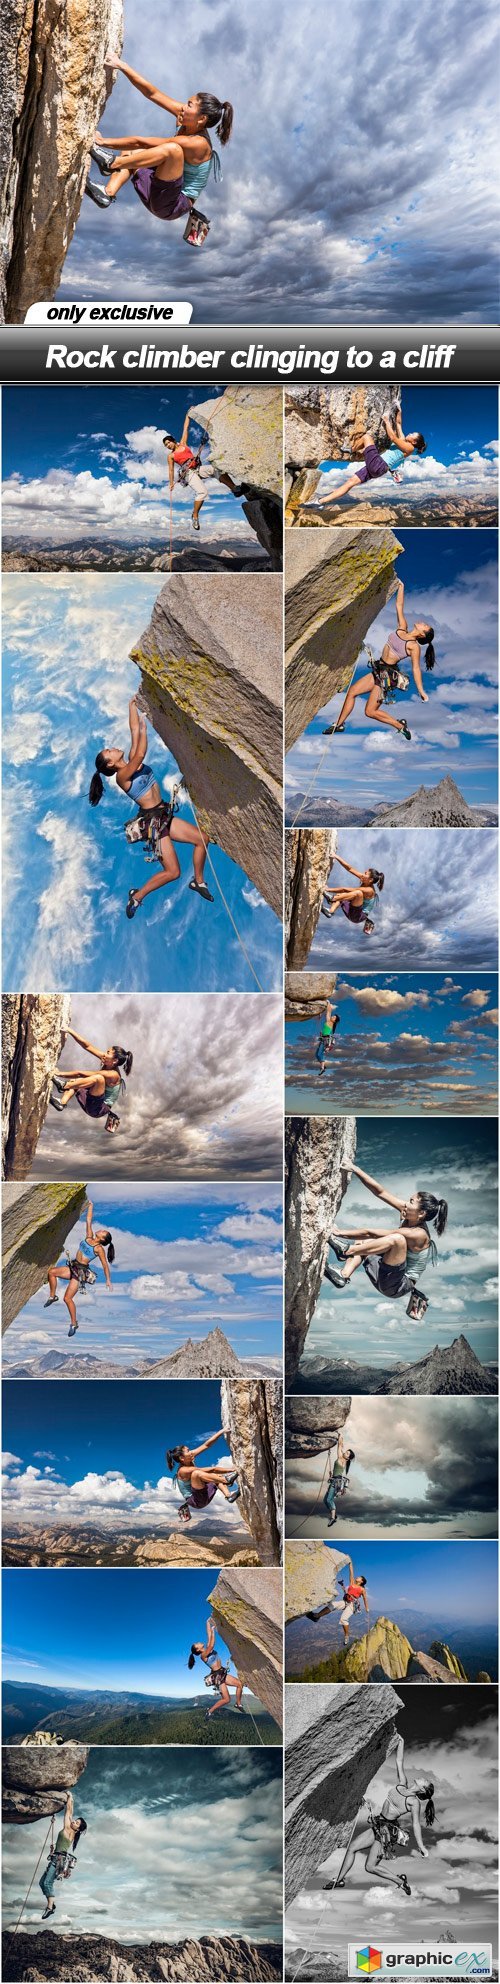 Rock climber clinging to a cliff - 44 UHQ JPEG